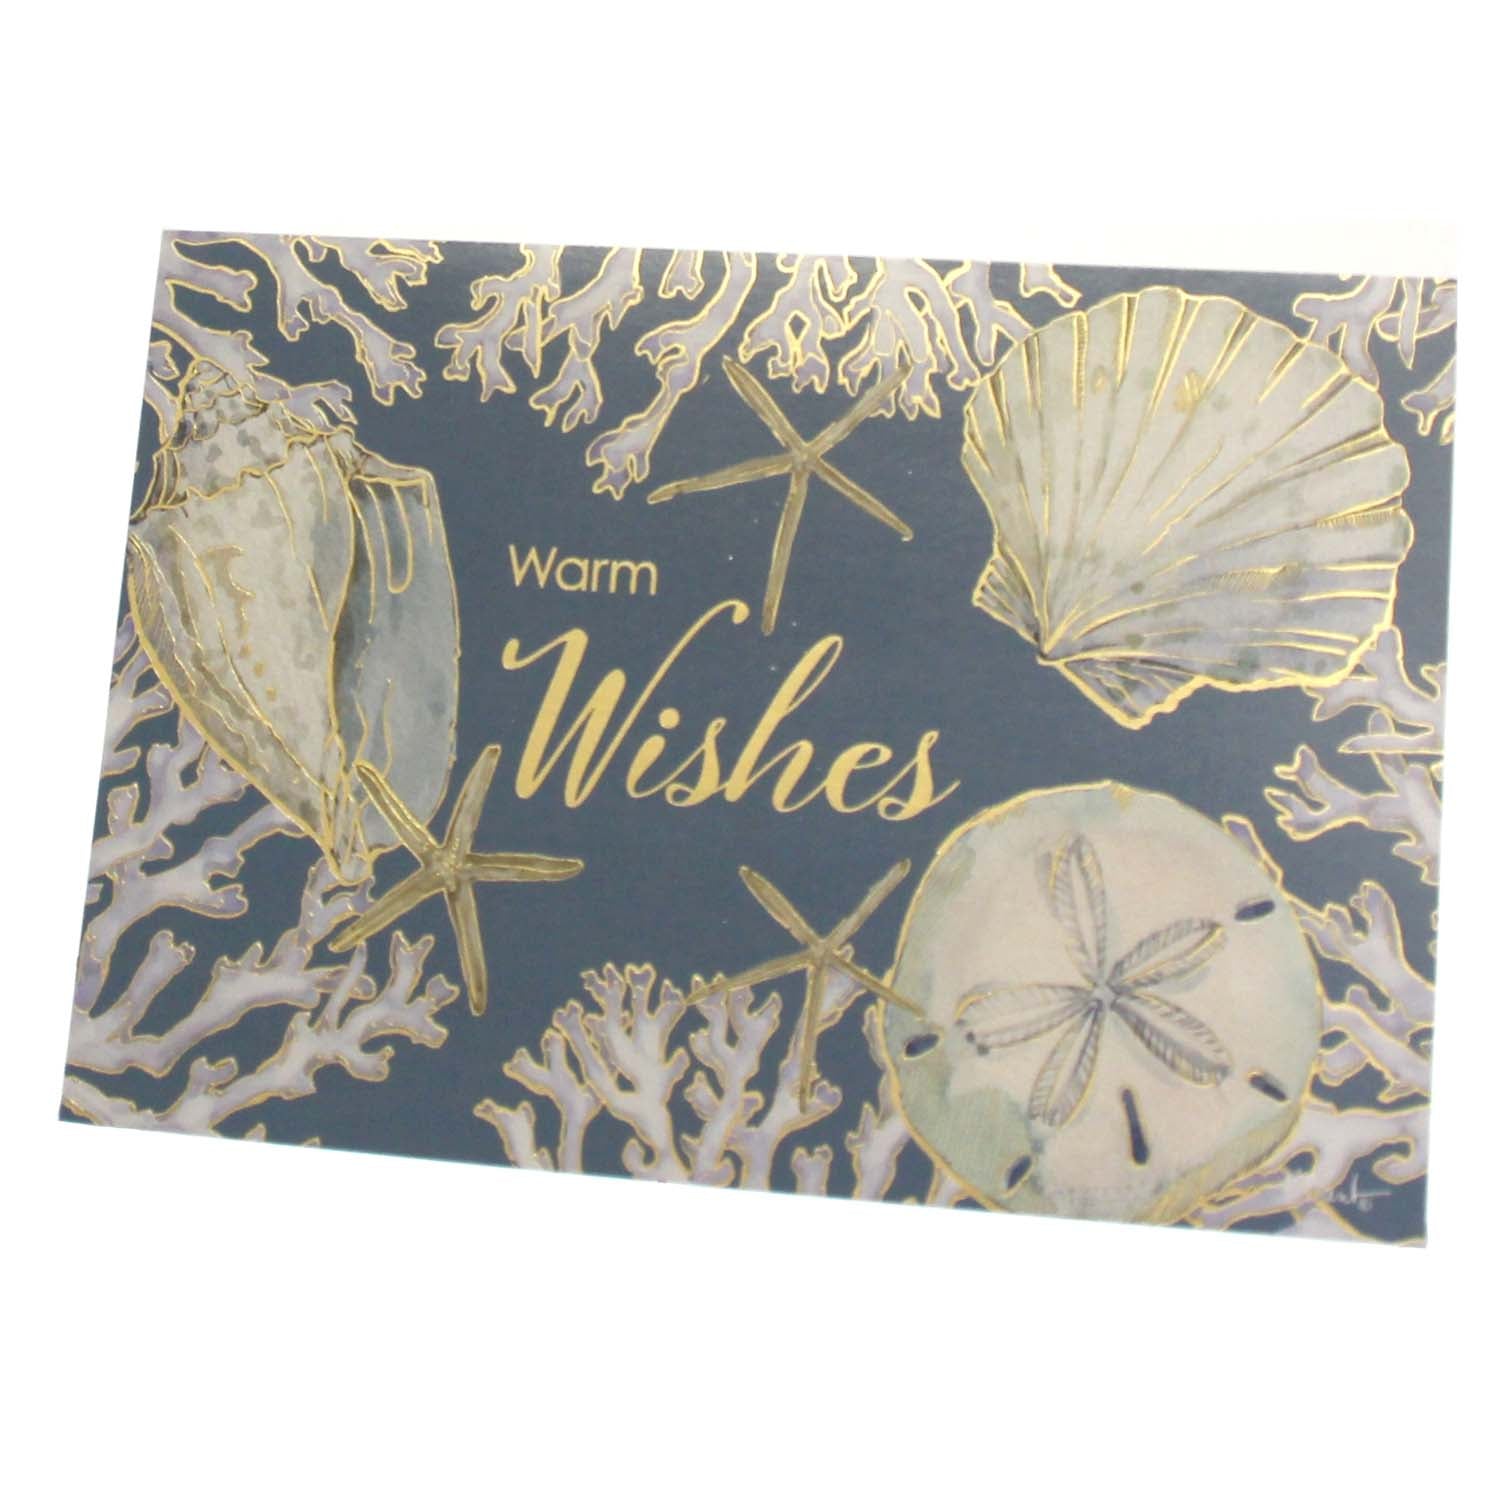 Christmas Card: Warm Wishes  (image of  seashells)